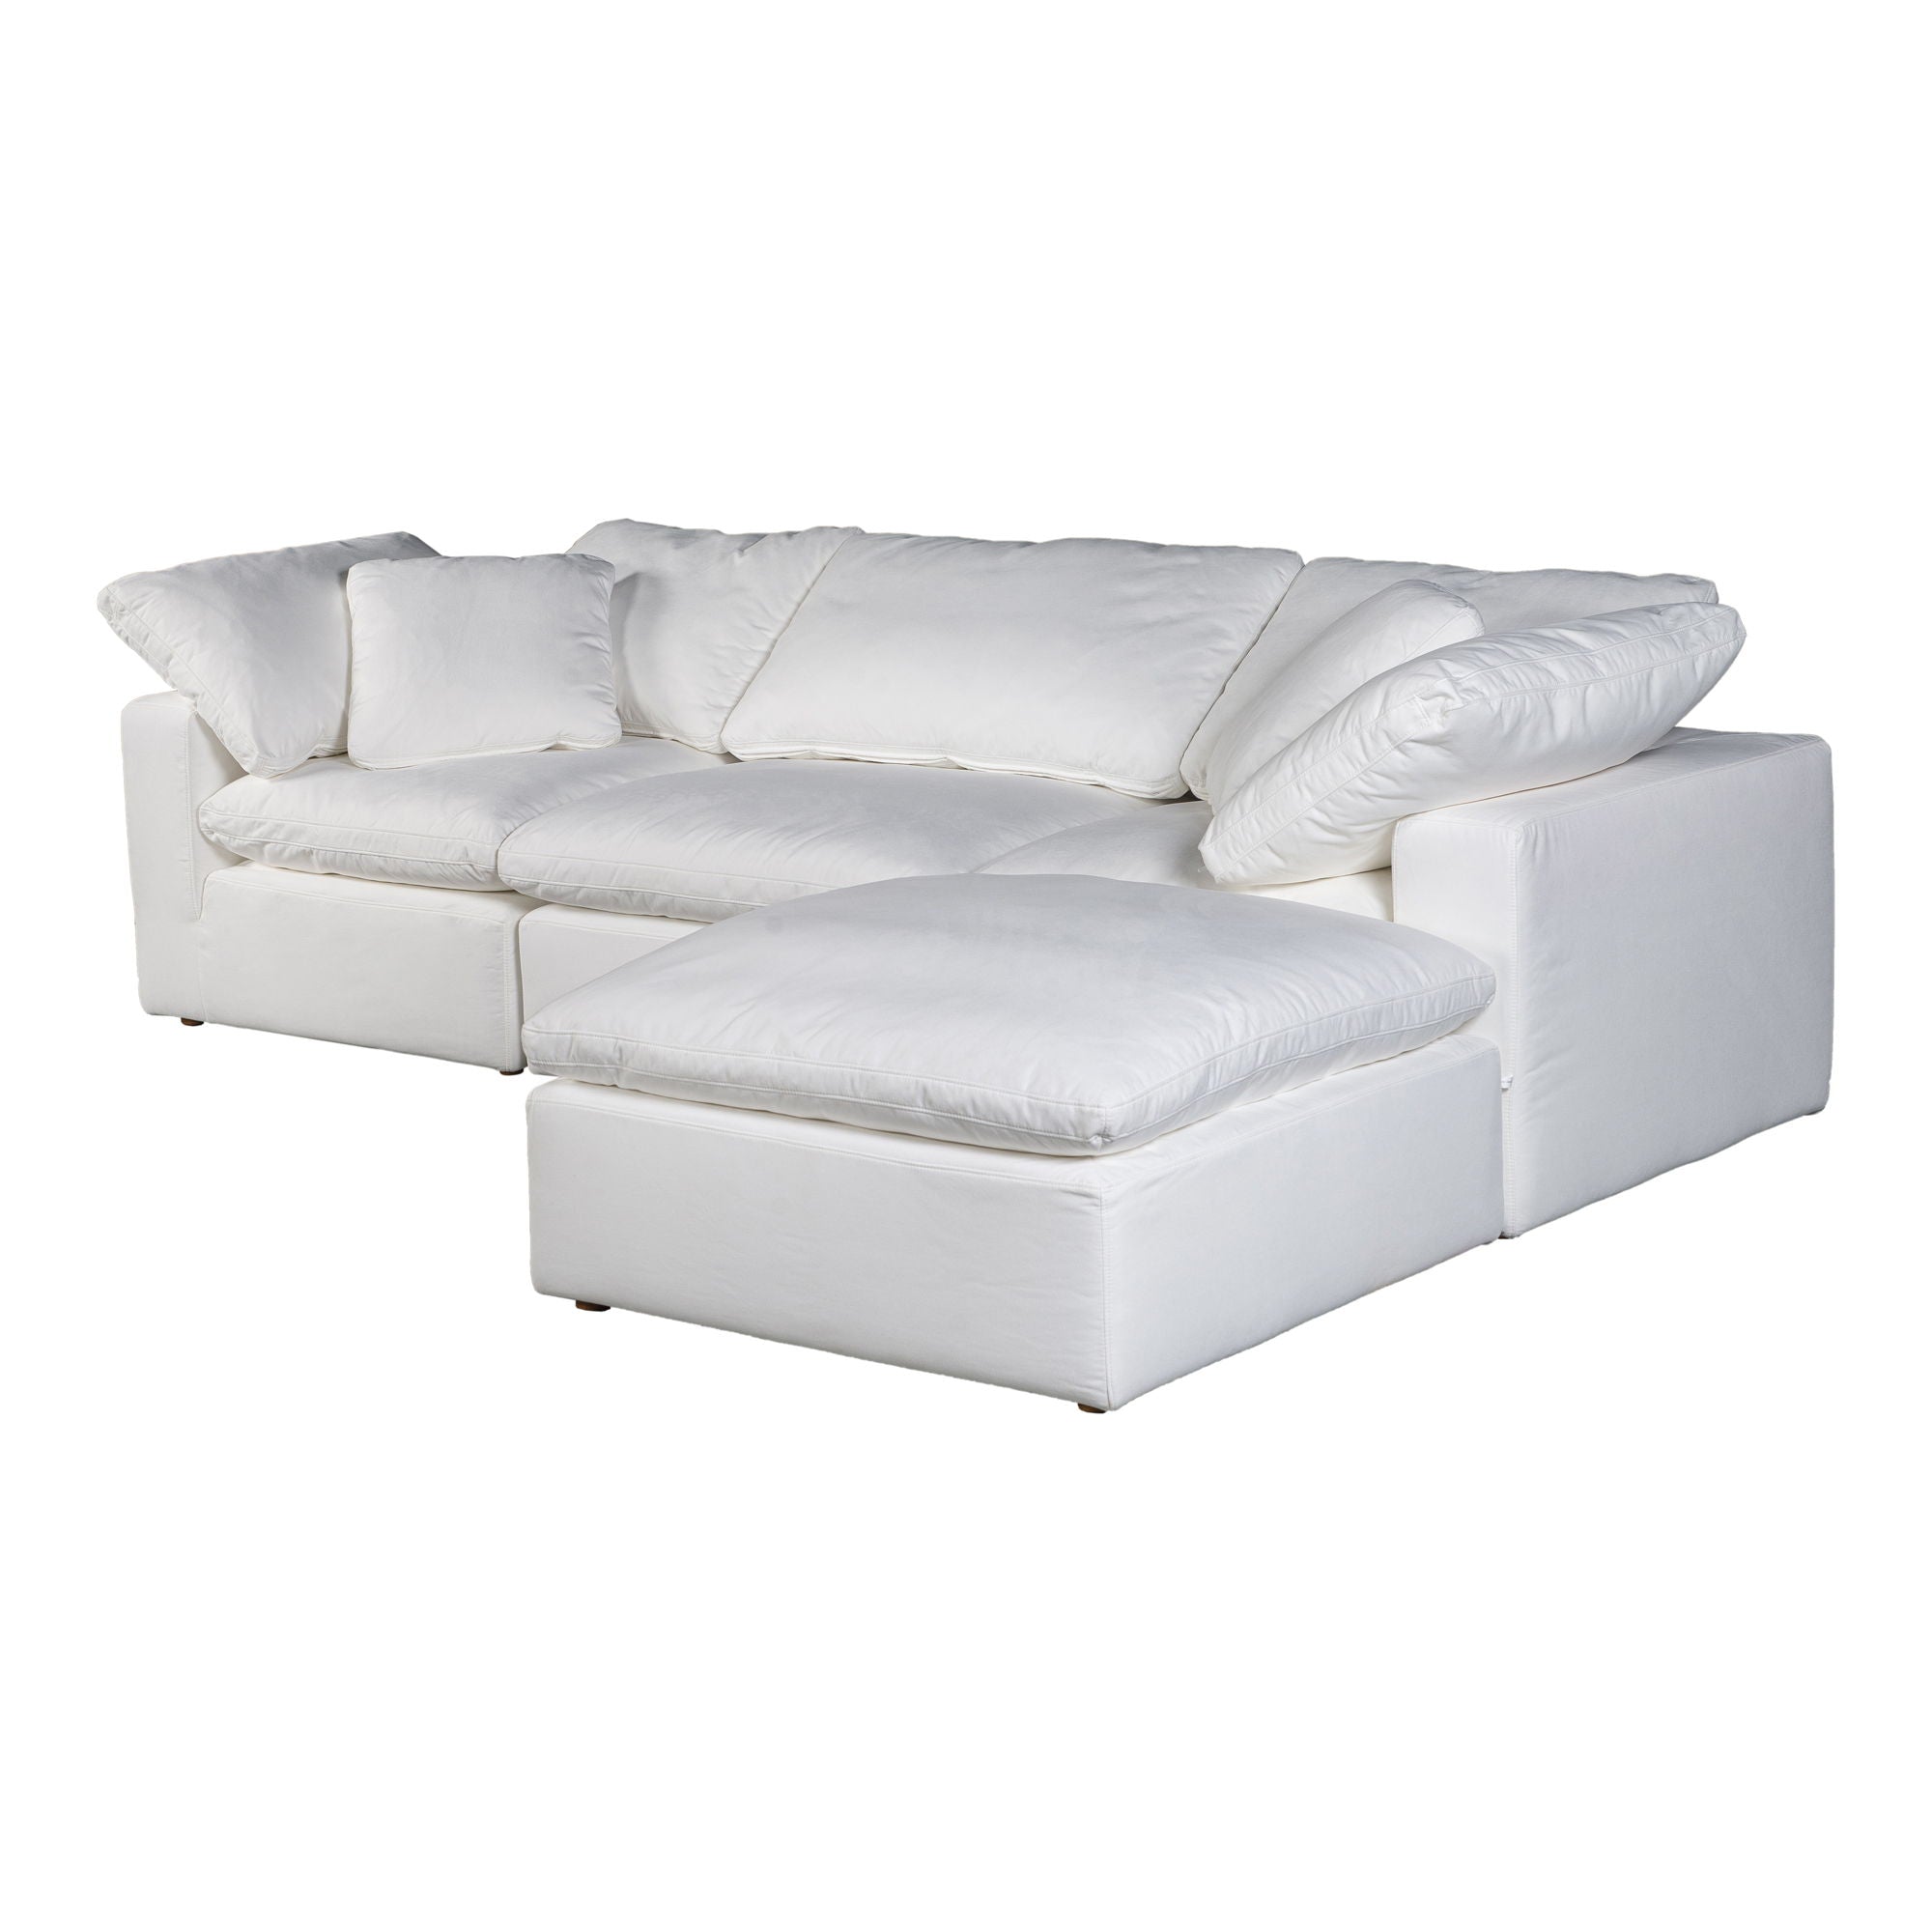 Terra Condo Lounge Modular Sectional - LiveSmart Fabric - Cream White - Comfortable and Stylish Living Room Furniture